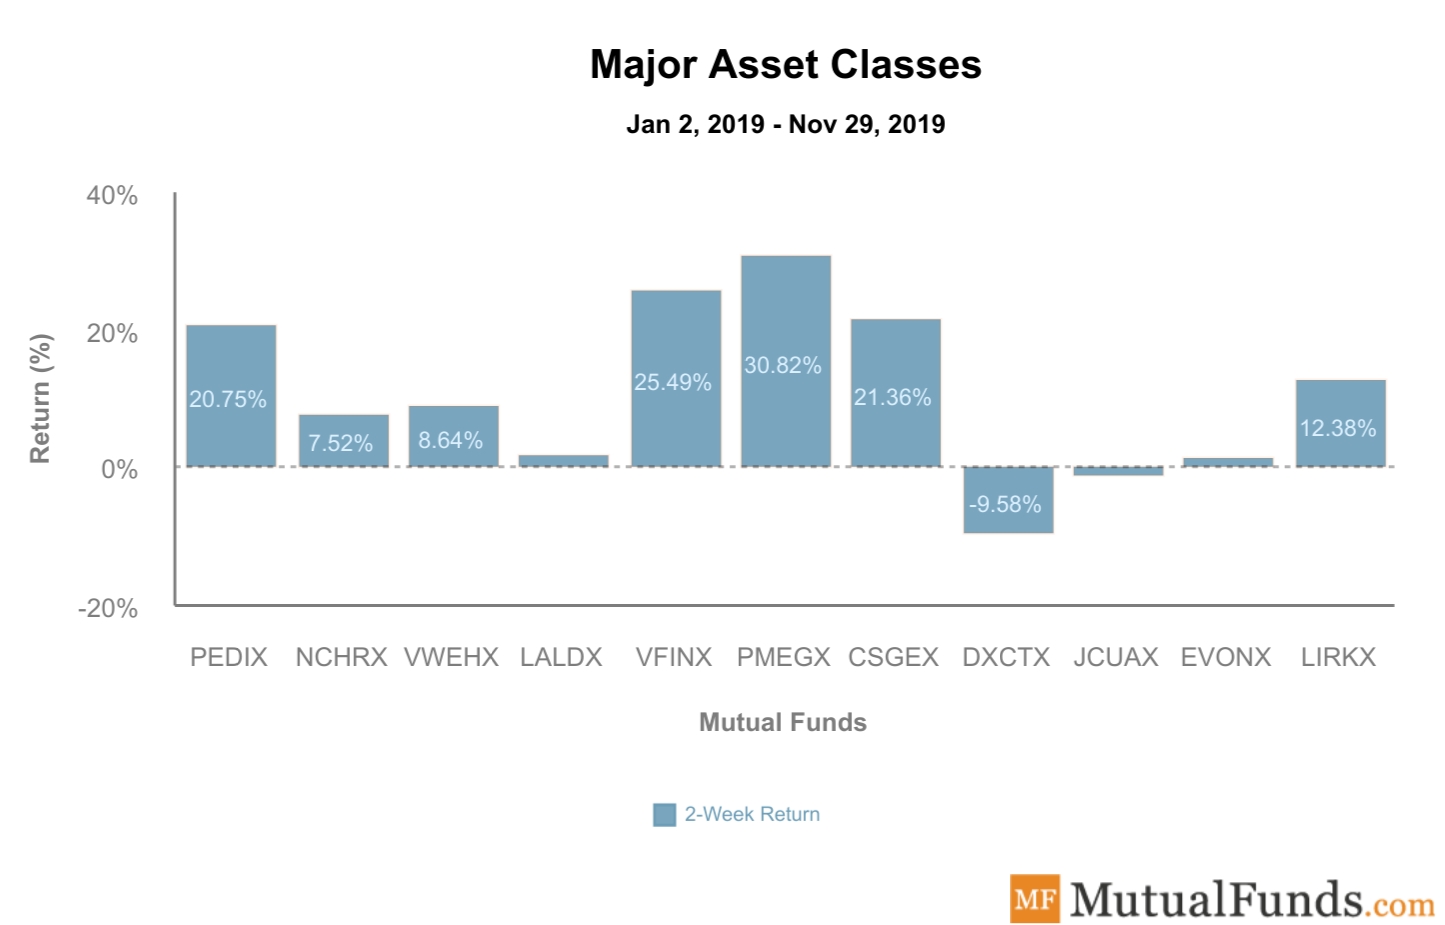 Major Asset Classes performance Dec 24, 2019